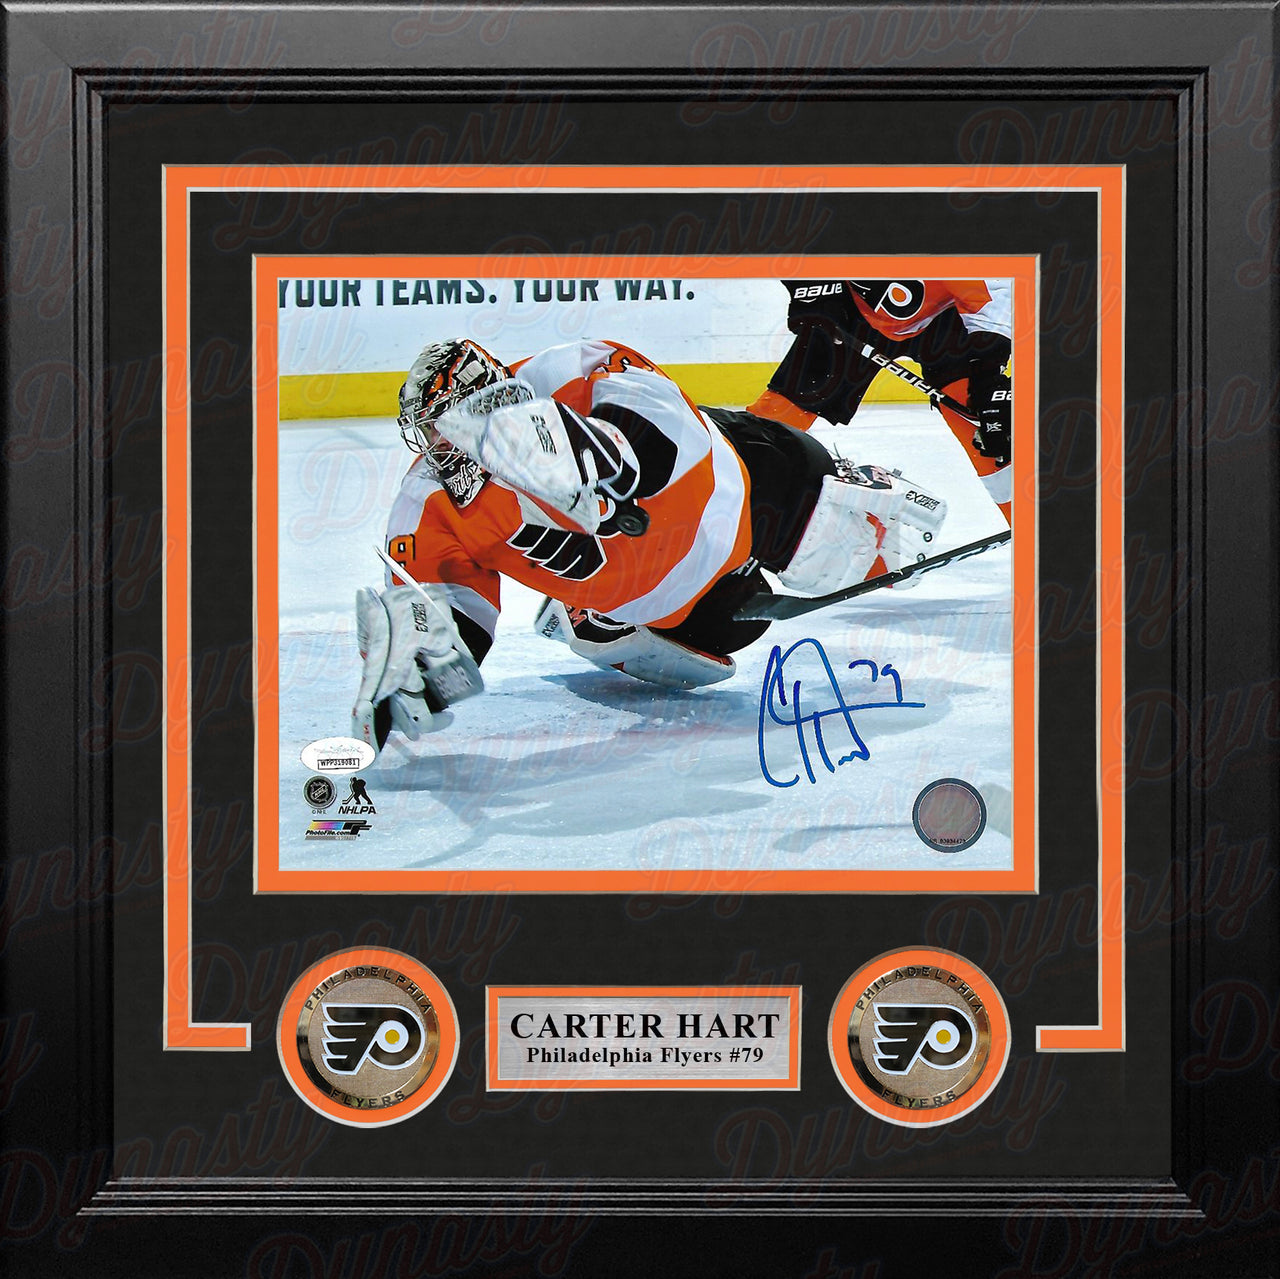 Carter Hart Philadelphia Flyers Diving Save vs. Canucks Autographed Framed Hockey Photo - Dynasty Sports & Framing 